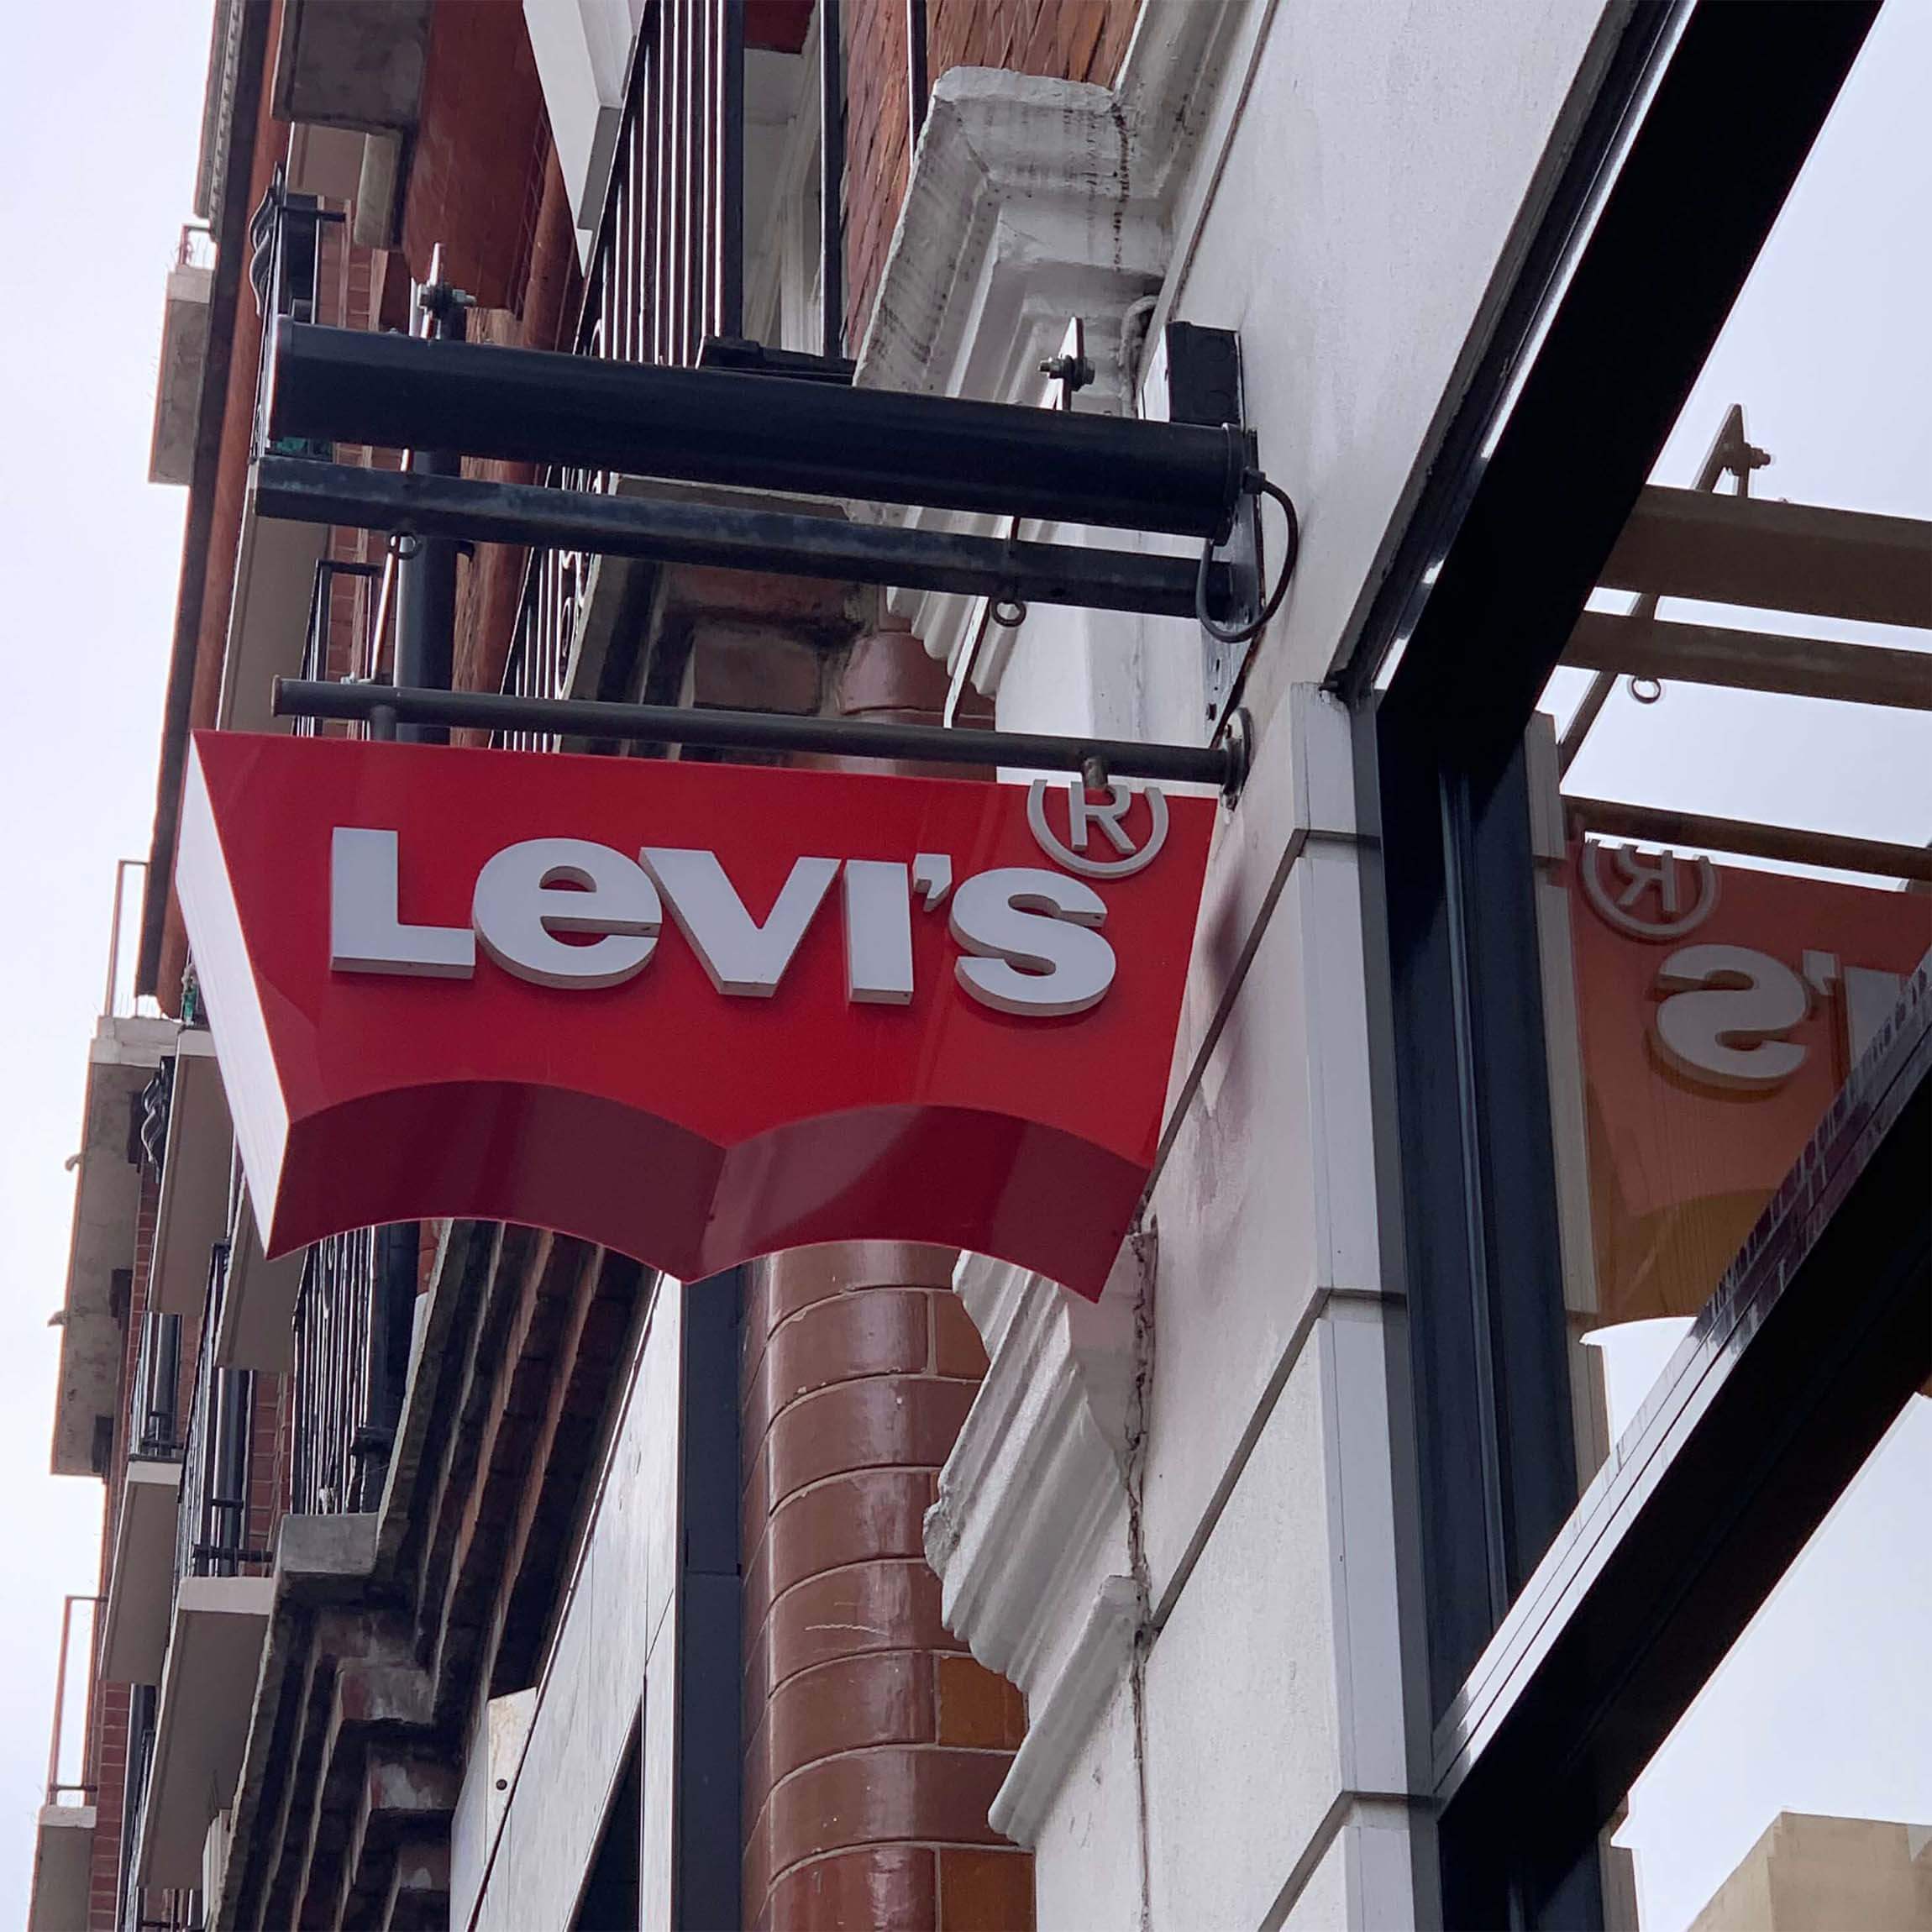 Levi's | Covent Garden London